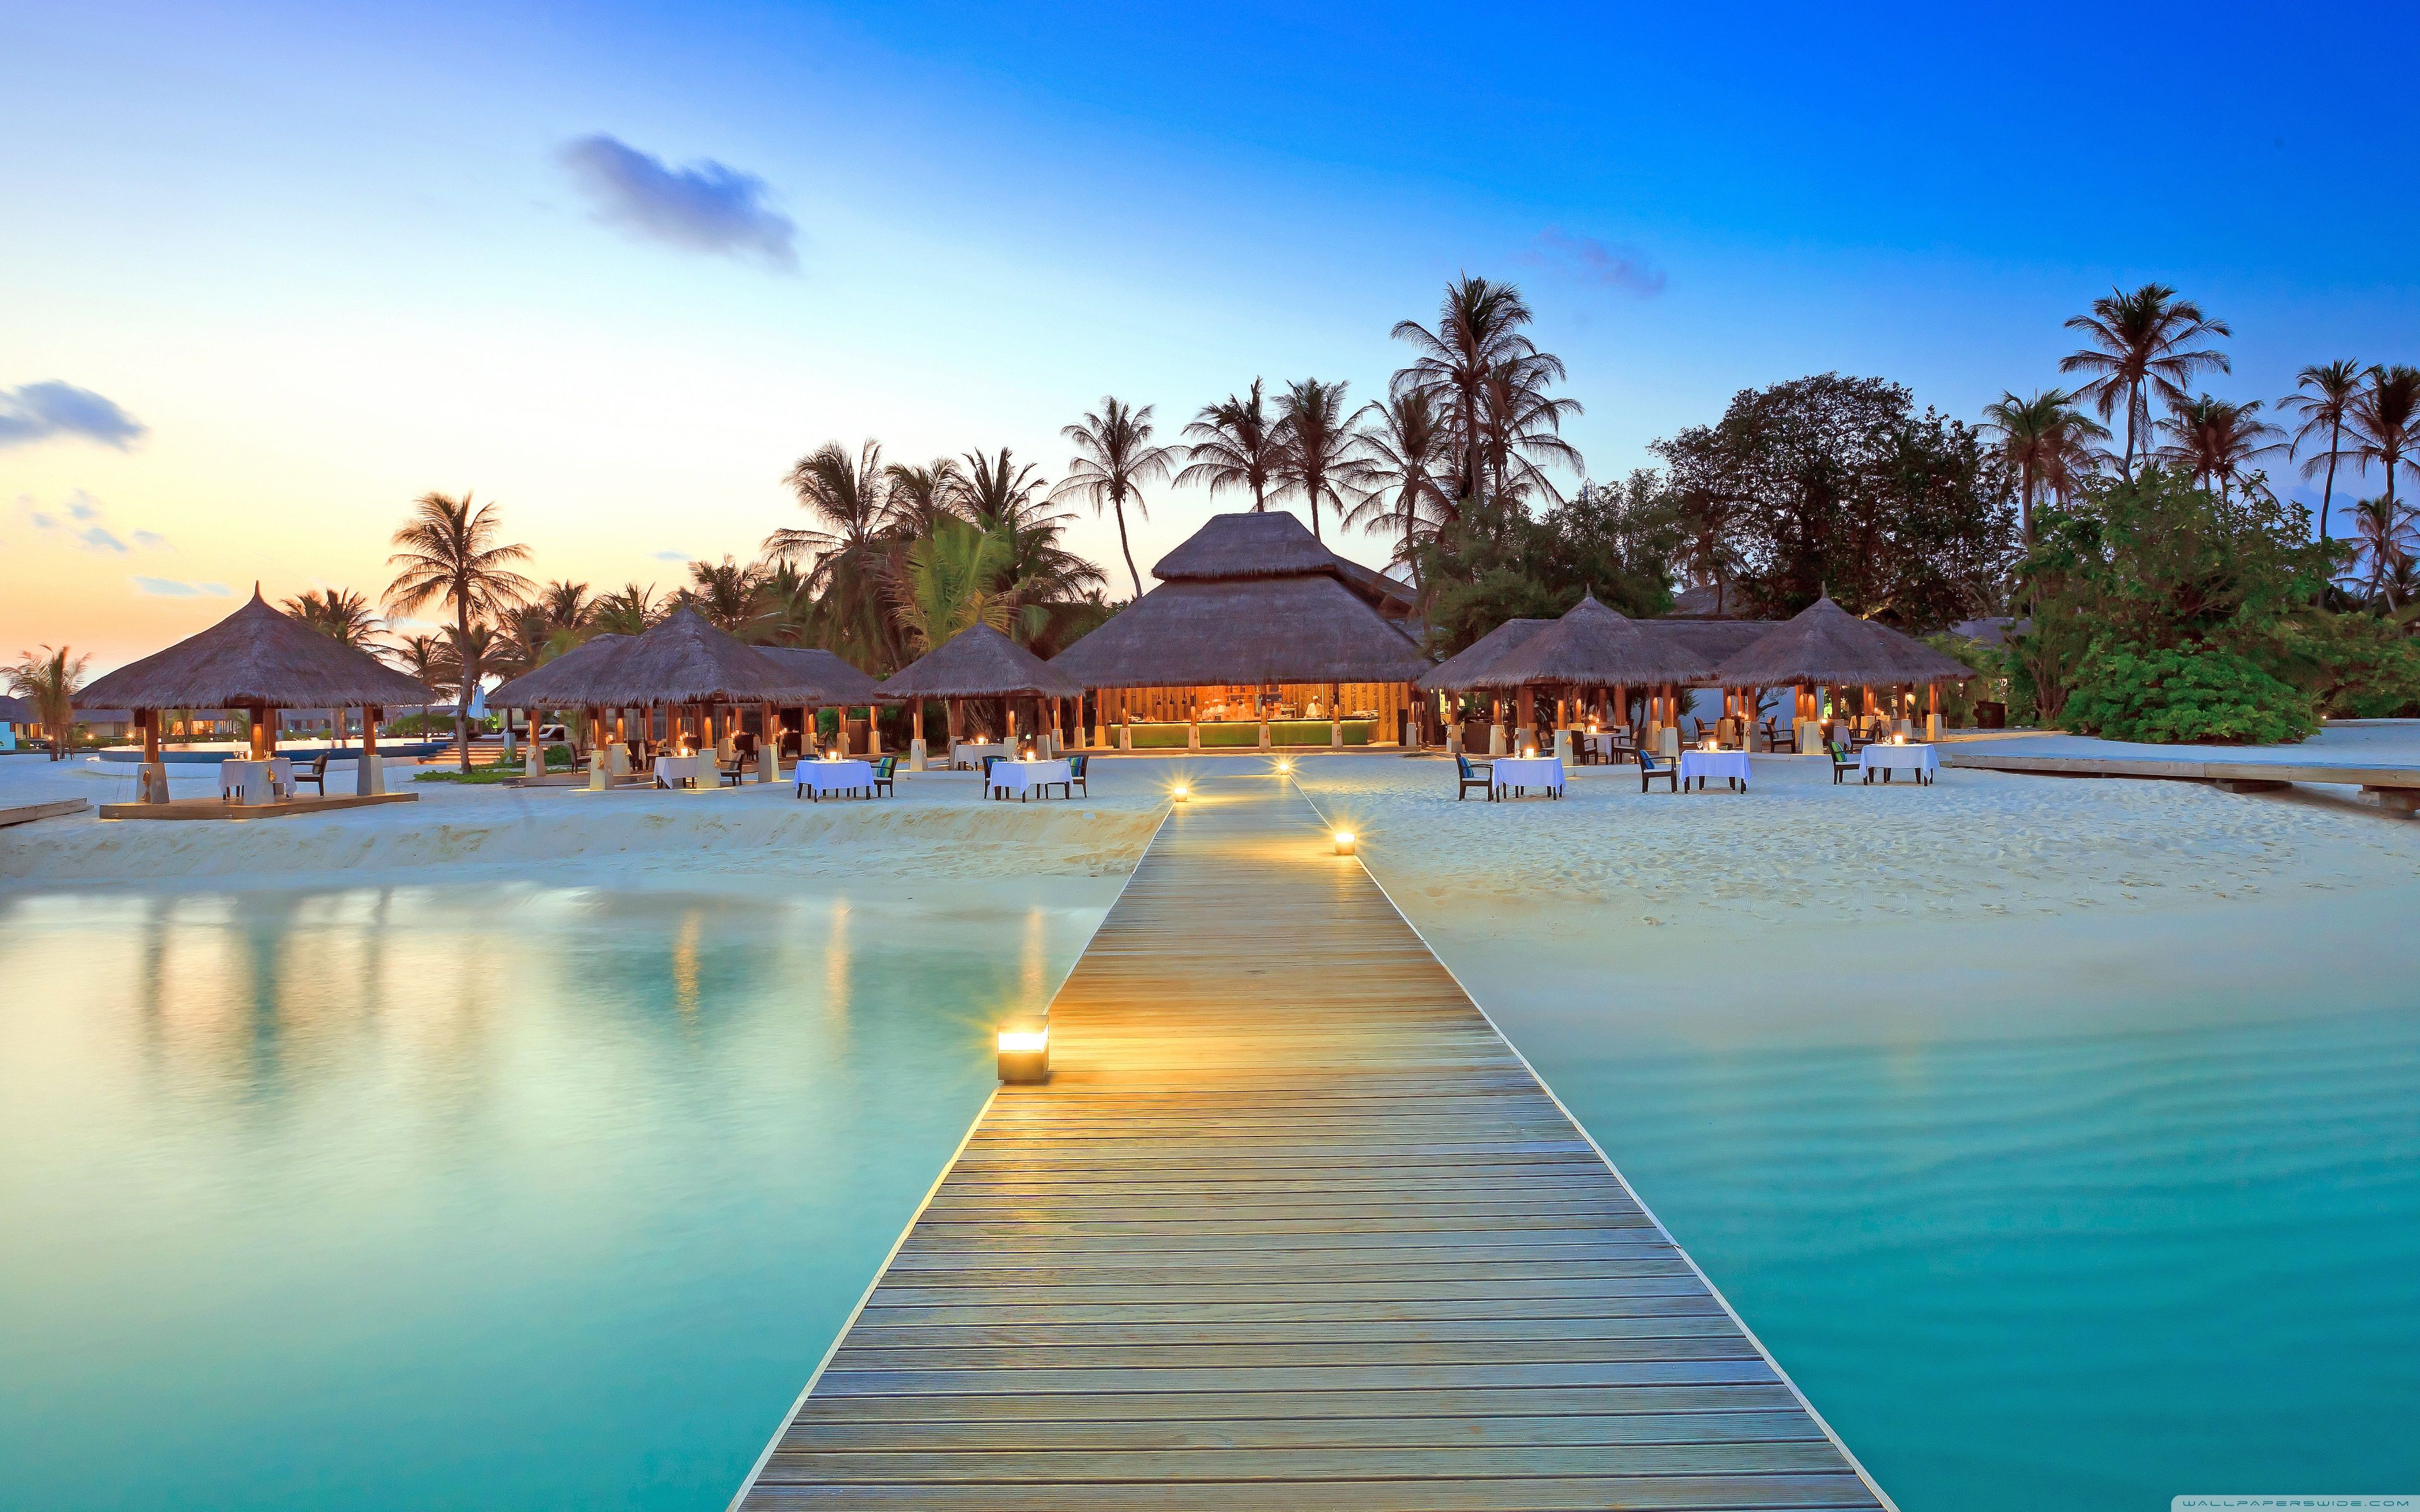 Maldive Islands Resort ❤ 4K HD Desktop Wallpaper for 4K Ultra HD TV